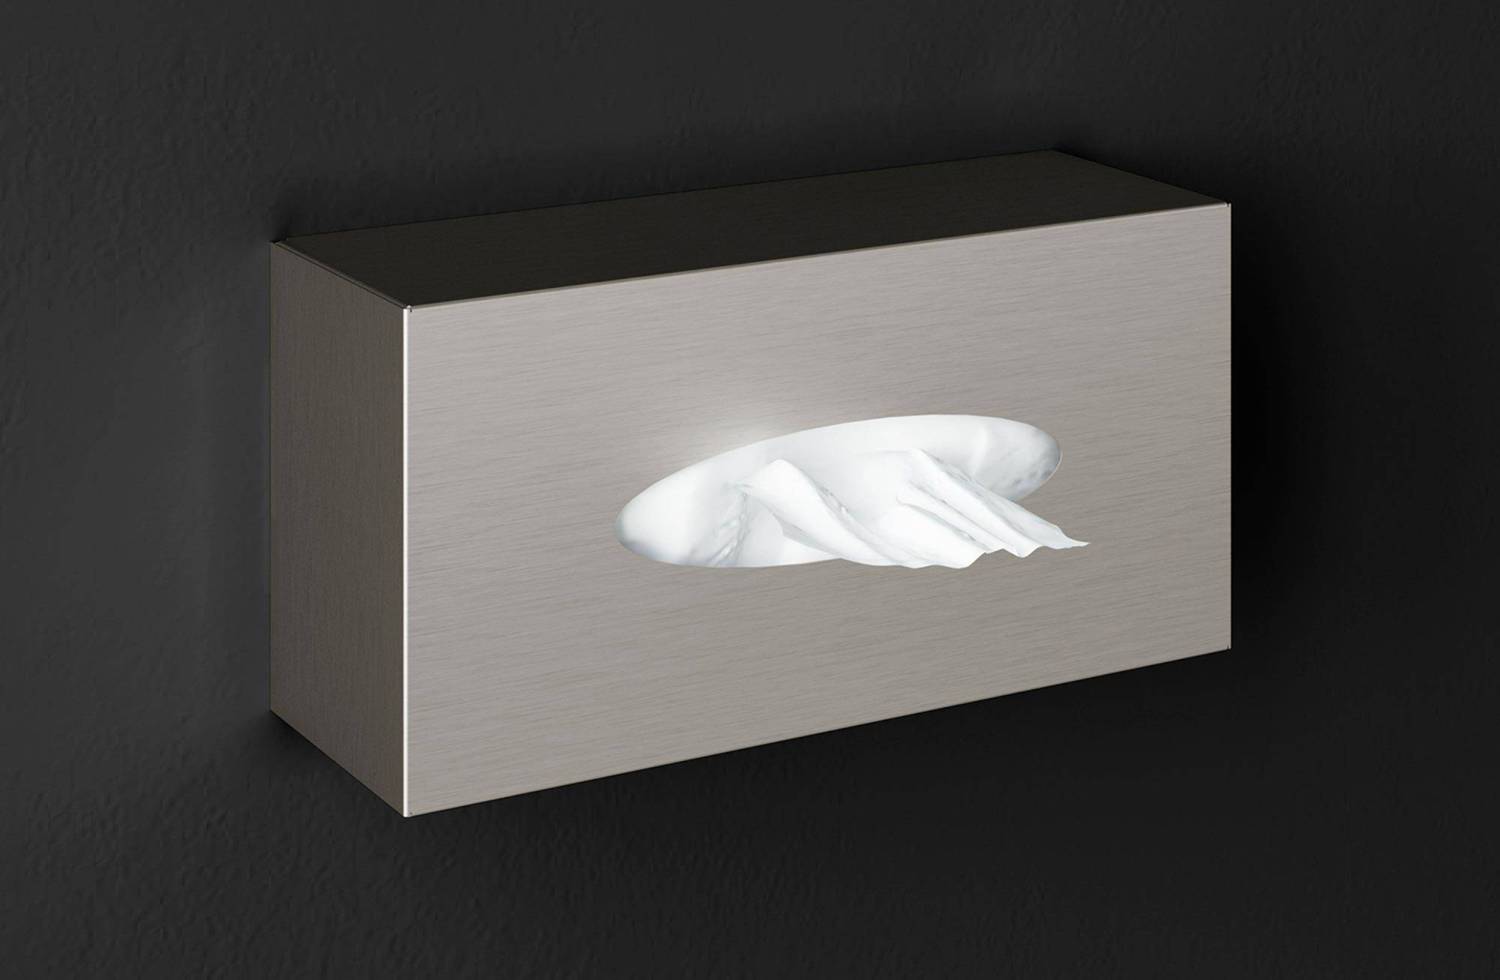 Caja Kleenex pared inox mate cepillado Architect S+ Cosmic en Minspira